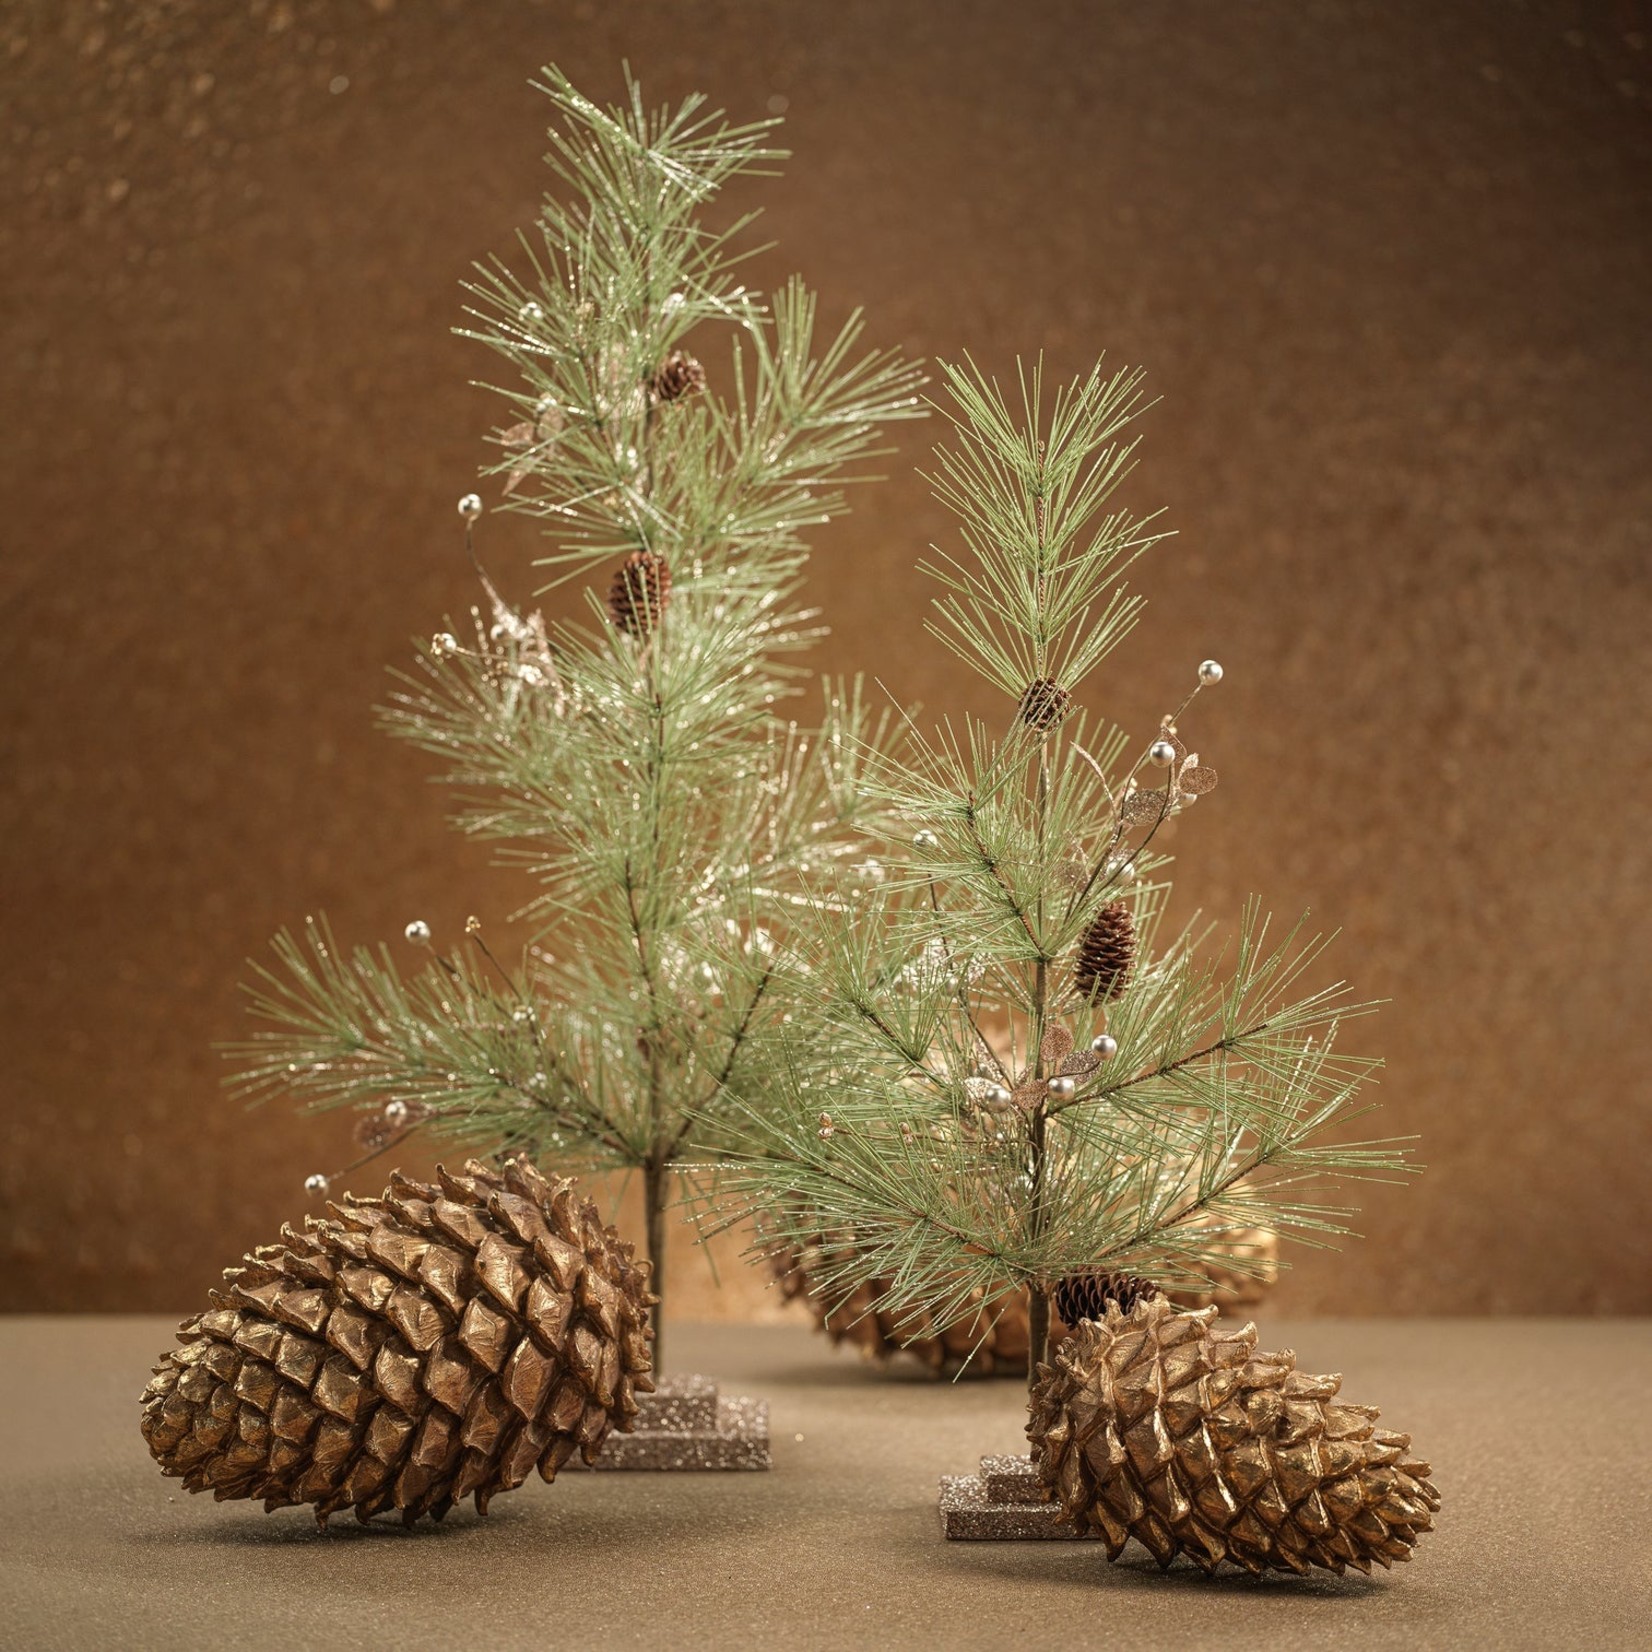 Zodax Needle Pine Tree with Small Pine Cones